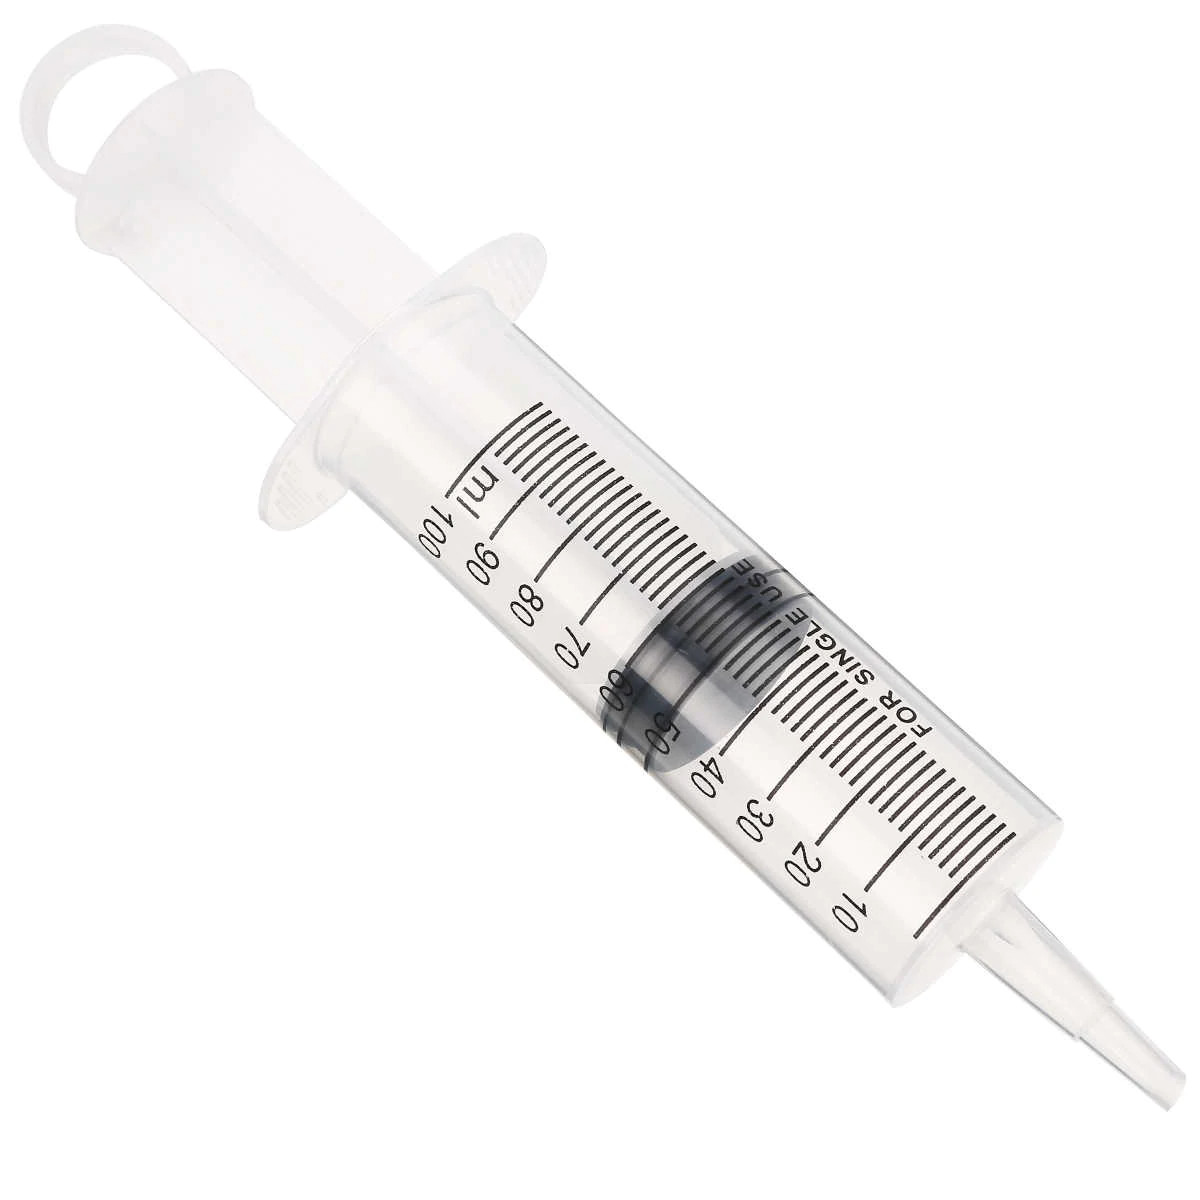 https://www.grovelandgecko.com/wp-content/uploads/2016/12/1Pc-Translucent-Measuring-Syringe-100ml-Plastic-Syringe-With-Cover-Measuring-Nutrient-Hydroponics-For-Accurately-Measured.jpg_q50.jpg